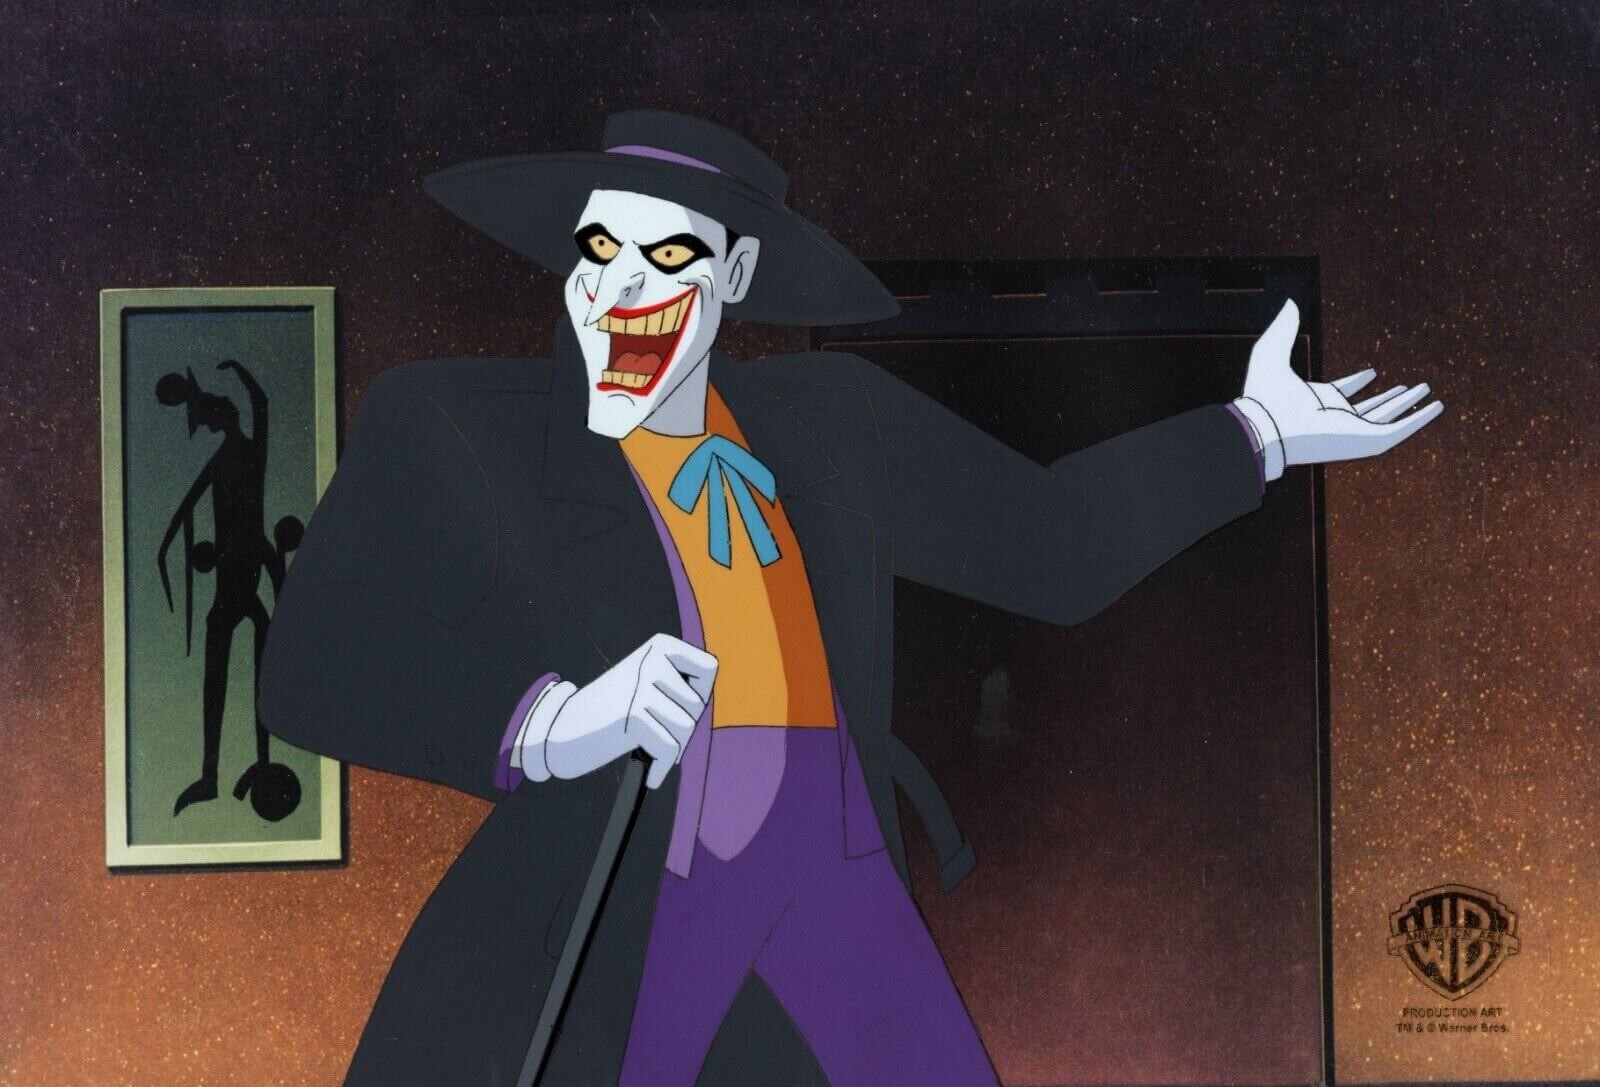 Hamill voiced the Joker in Batman: Mask of the Phantasm.